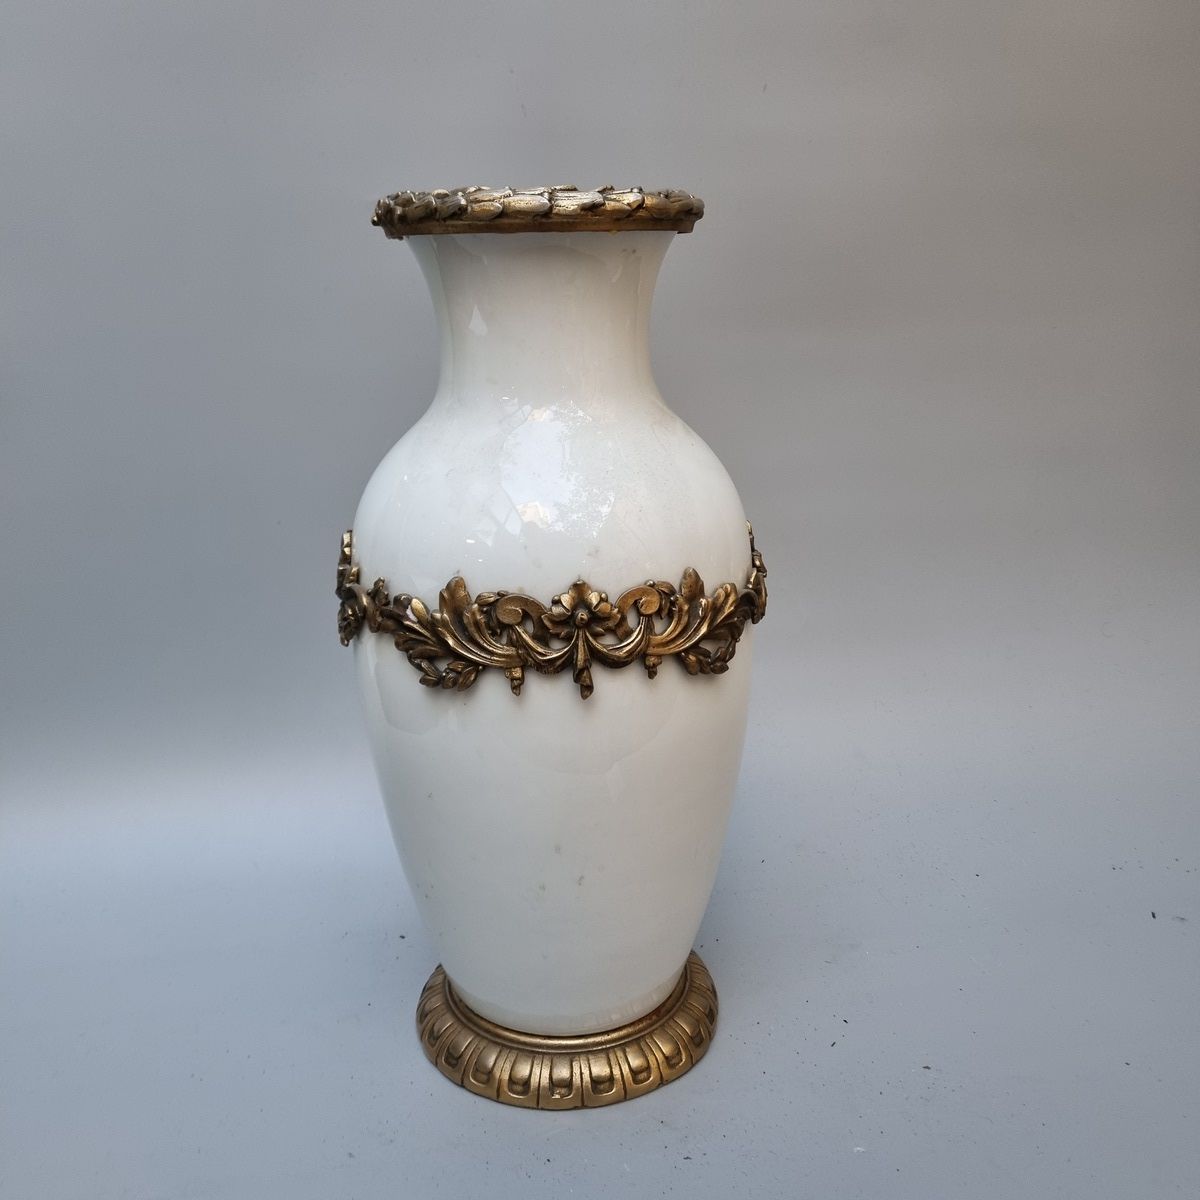 Null 乳白色玻璃柱形花瓶，镀金铜框

1900

高:44厘米